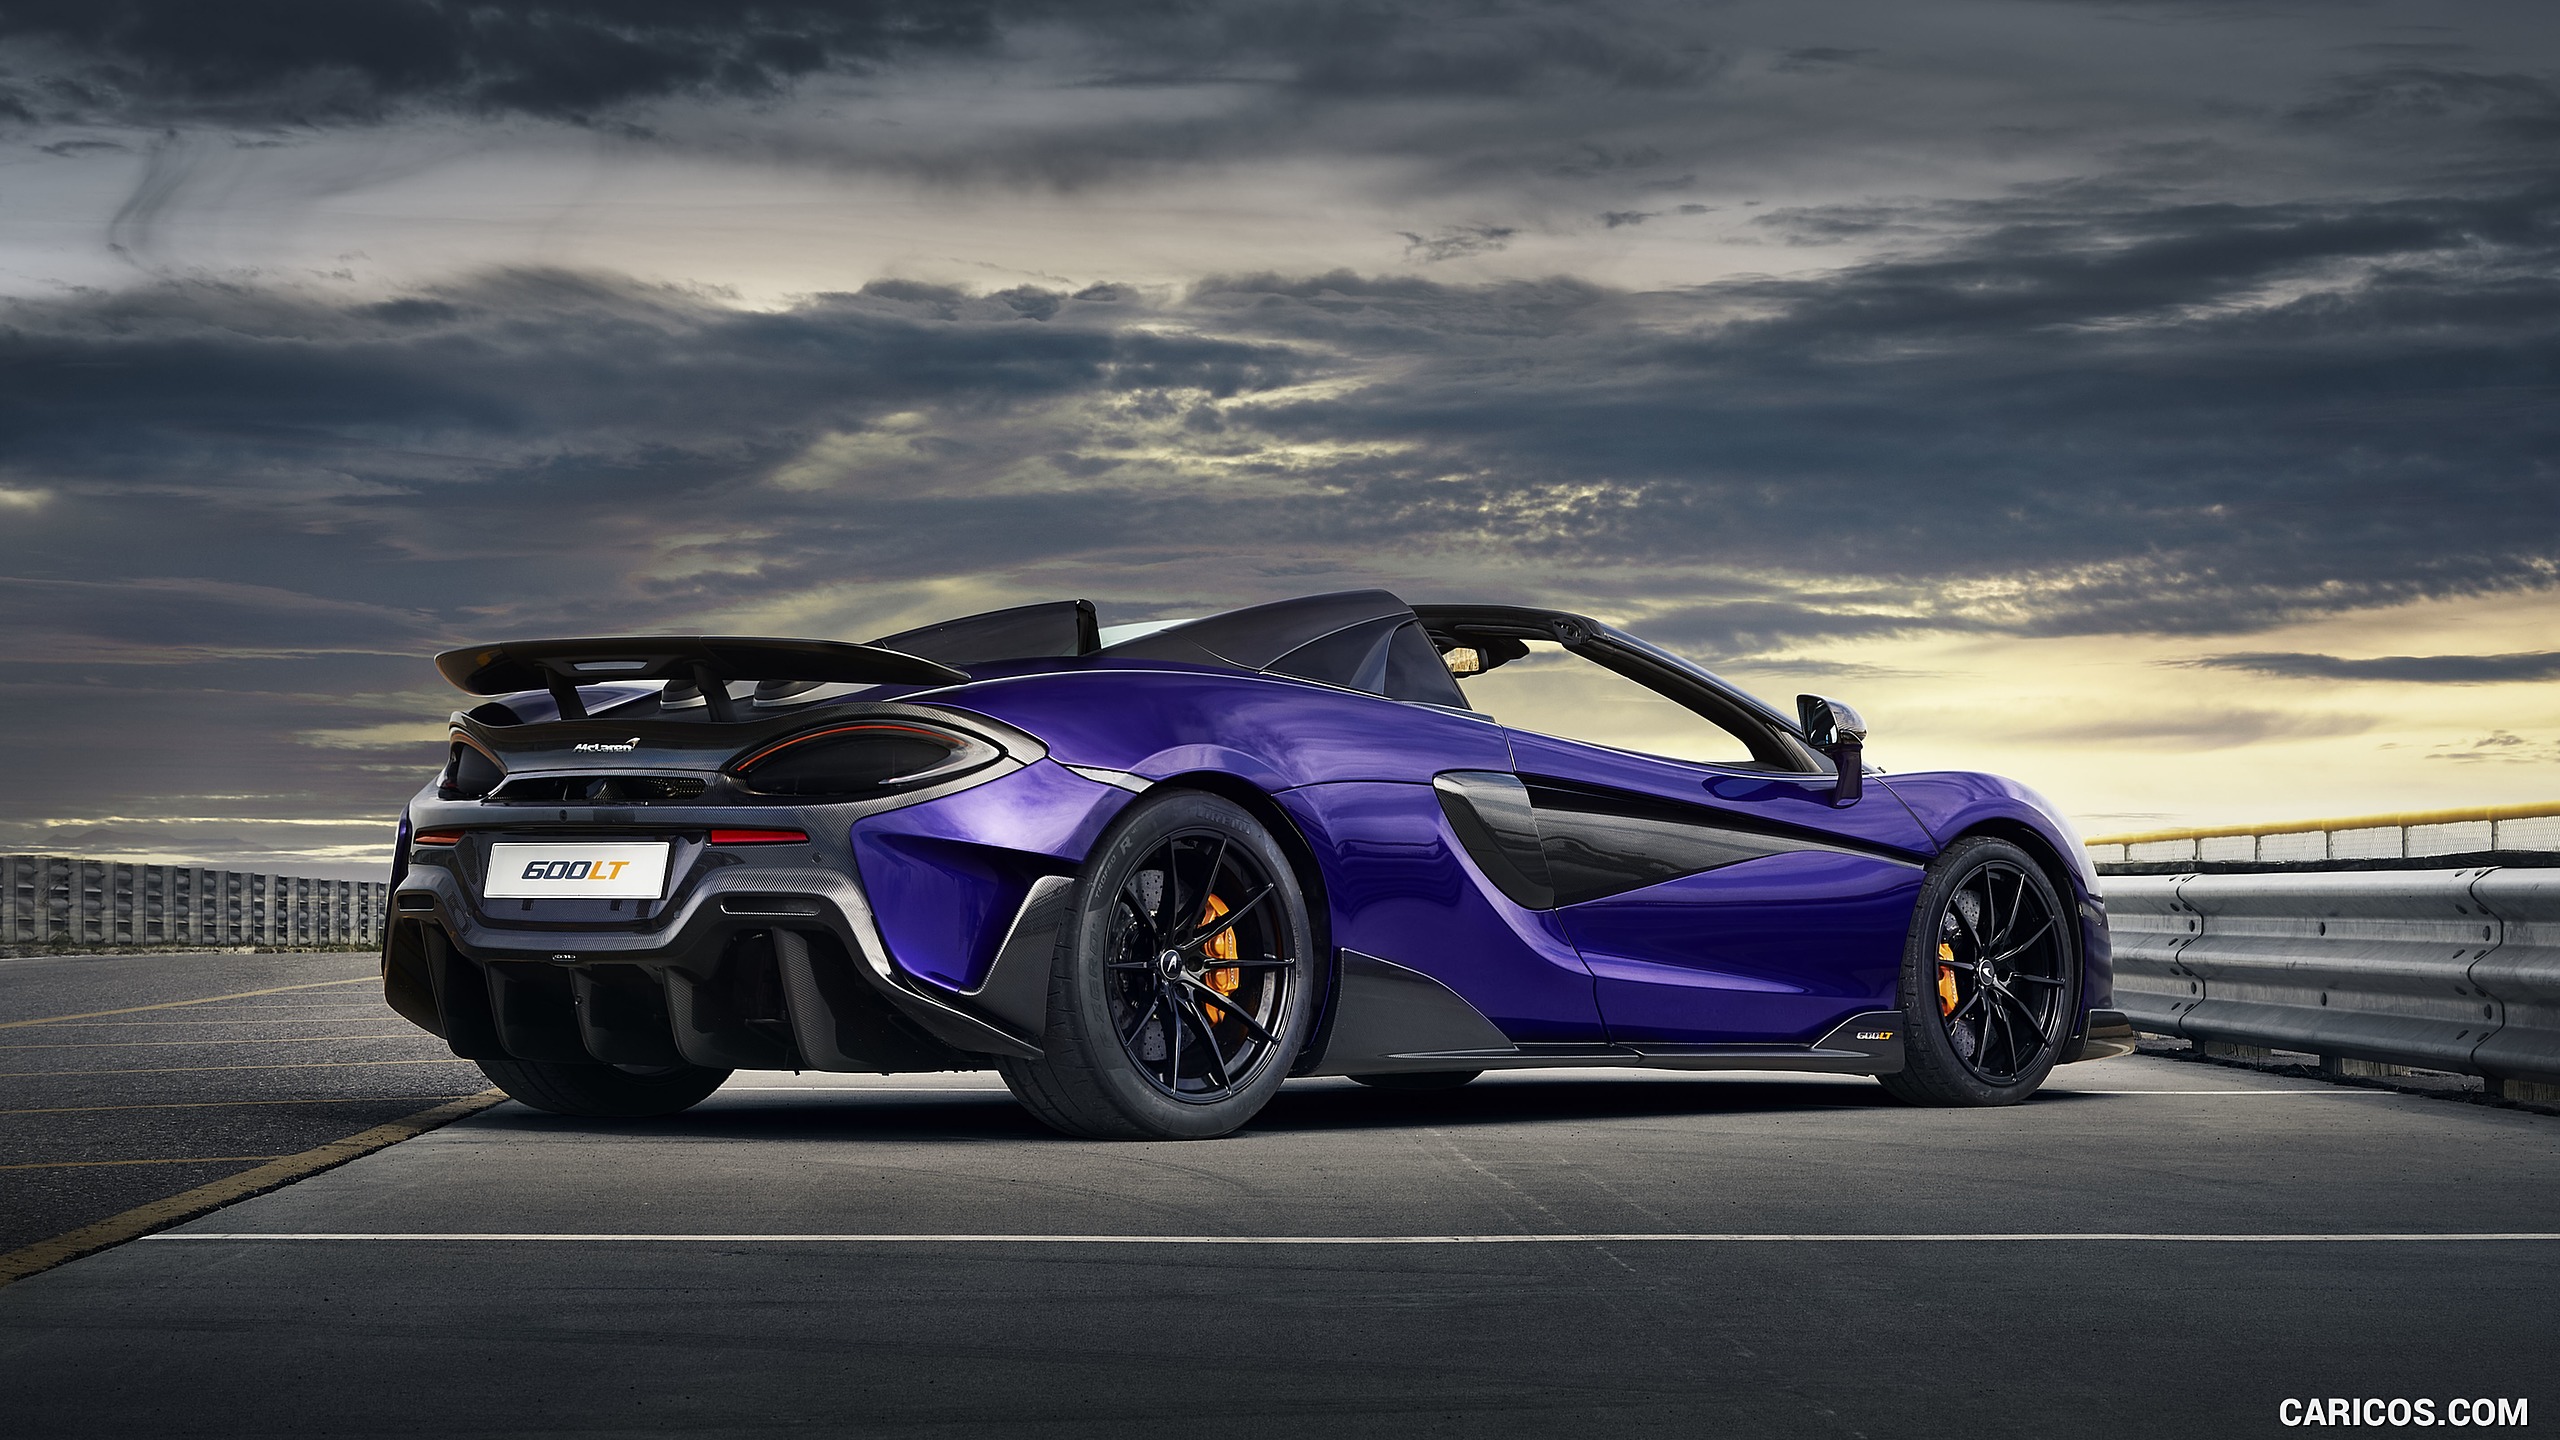 2020 McLaren 600LT Spider (Color: Lantana Purple) - Rear Three-Quarter, #64 of 97